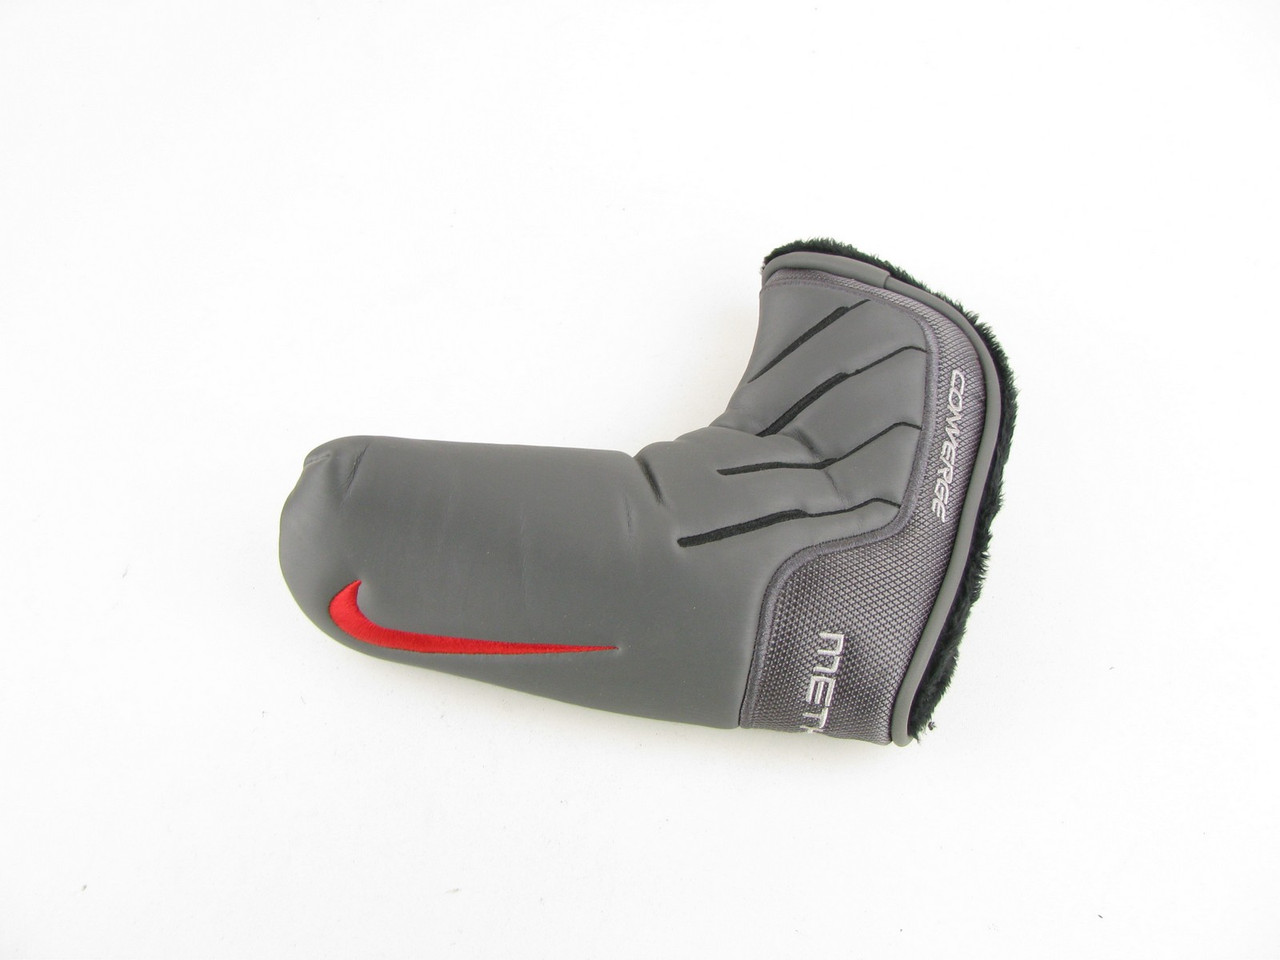 NEW Nike Method Converge Blade Putter Headcover - n Covers Golf